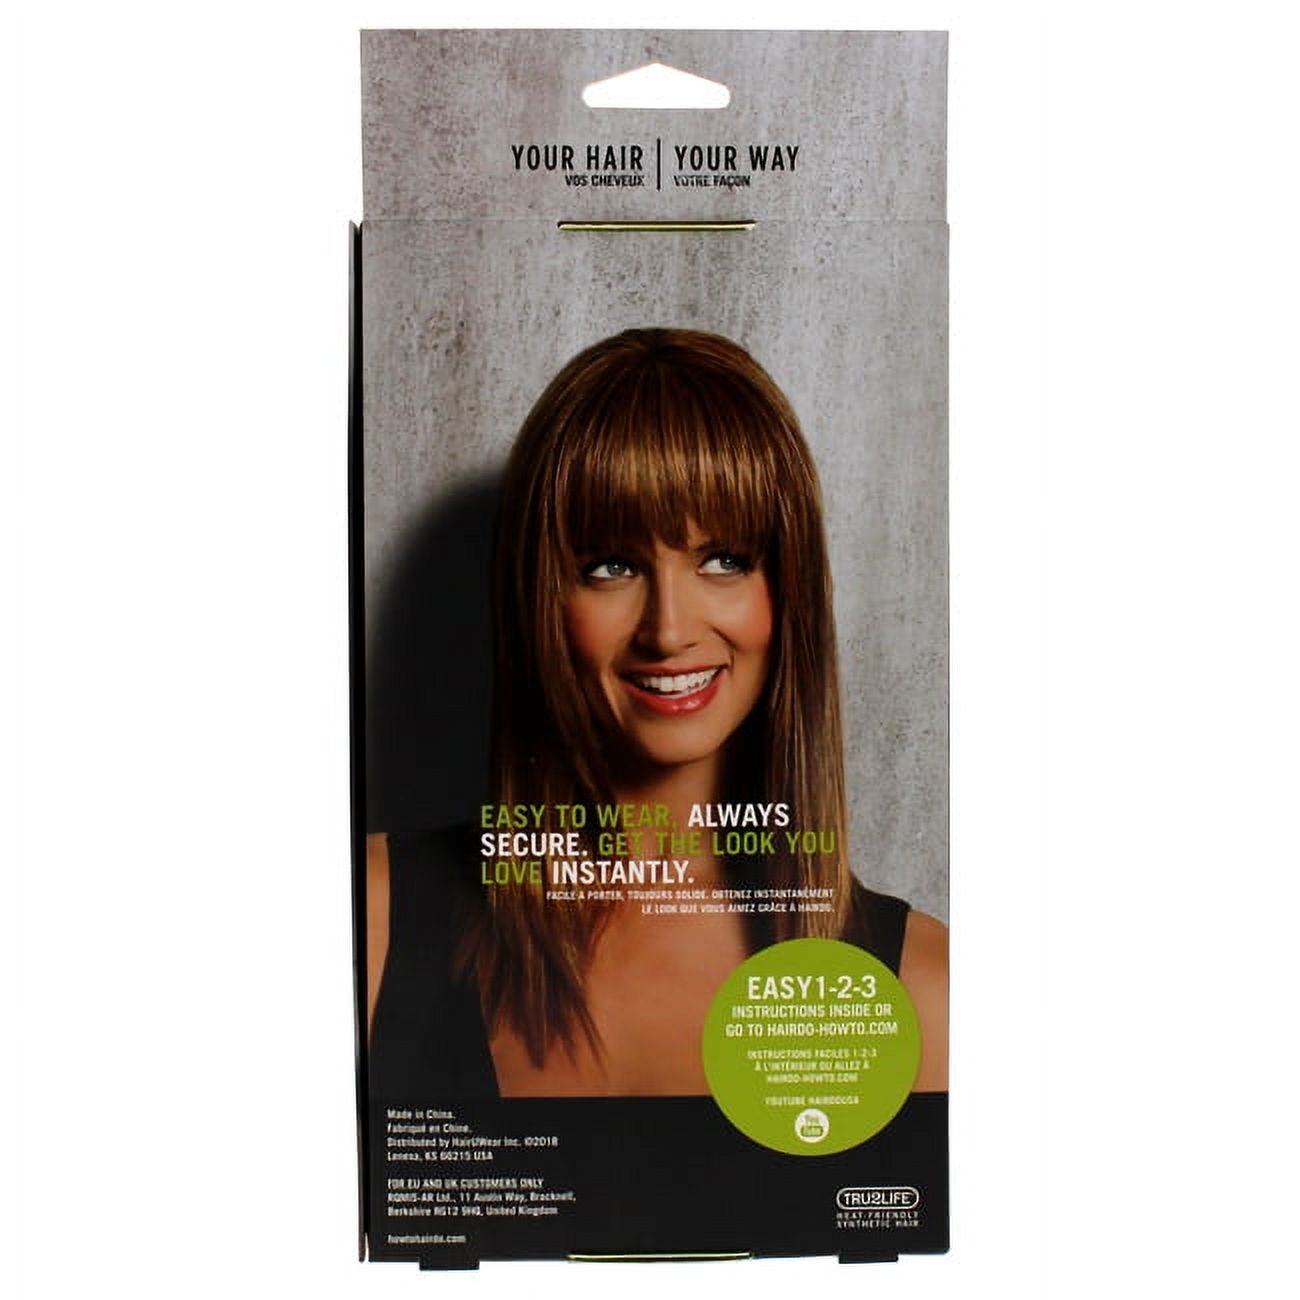 Hairdo Modern Fringe Clip In Bang - R830 Ginger Brown Hair Extension 1 Pc - image 1 of 1